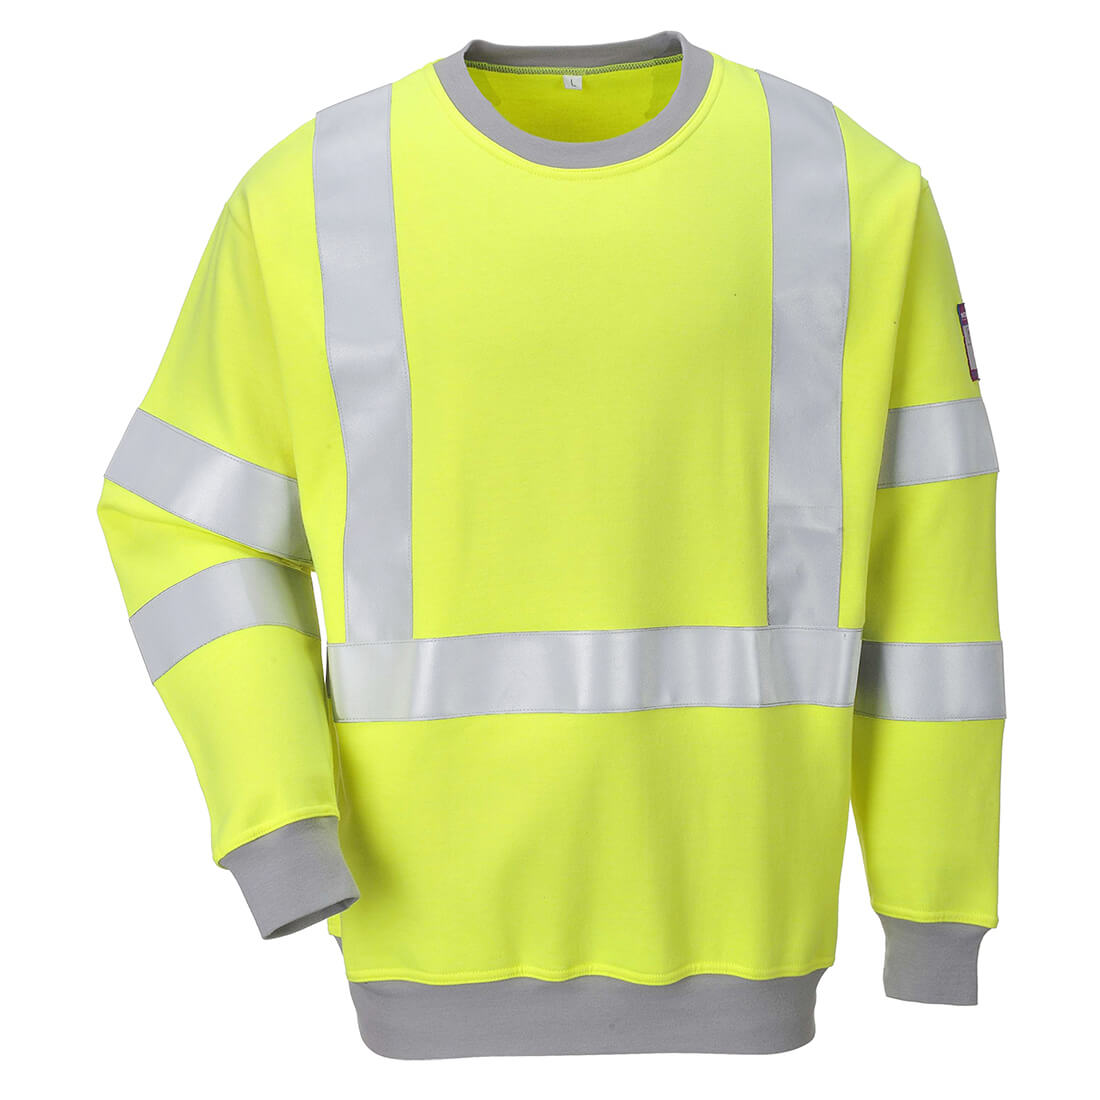 Image of Modaflame Mens Flame Resistant Hi Vis Sweatshirt Yellow XL